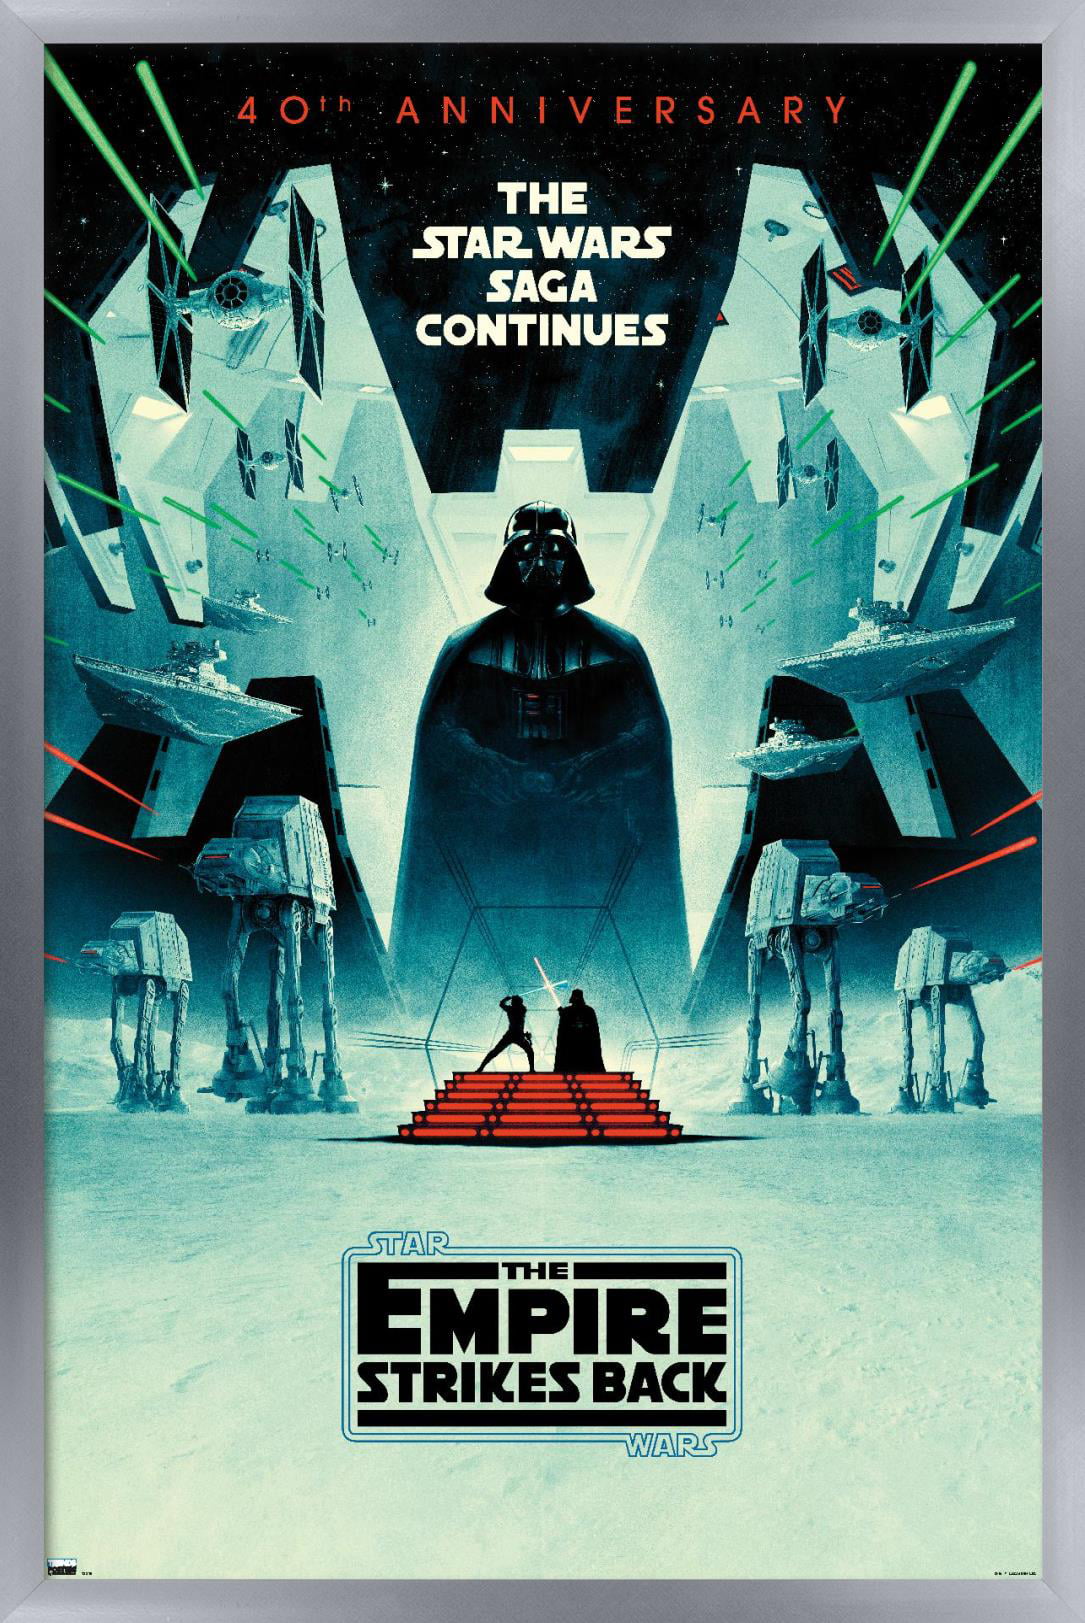 Star Wars The Empire Strikes Back Collectors Edition Poster 21 x 32 –  PosterAmerica